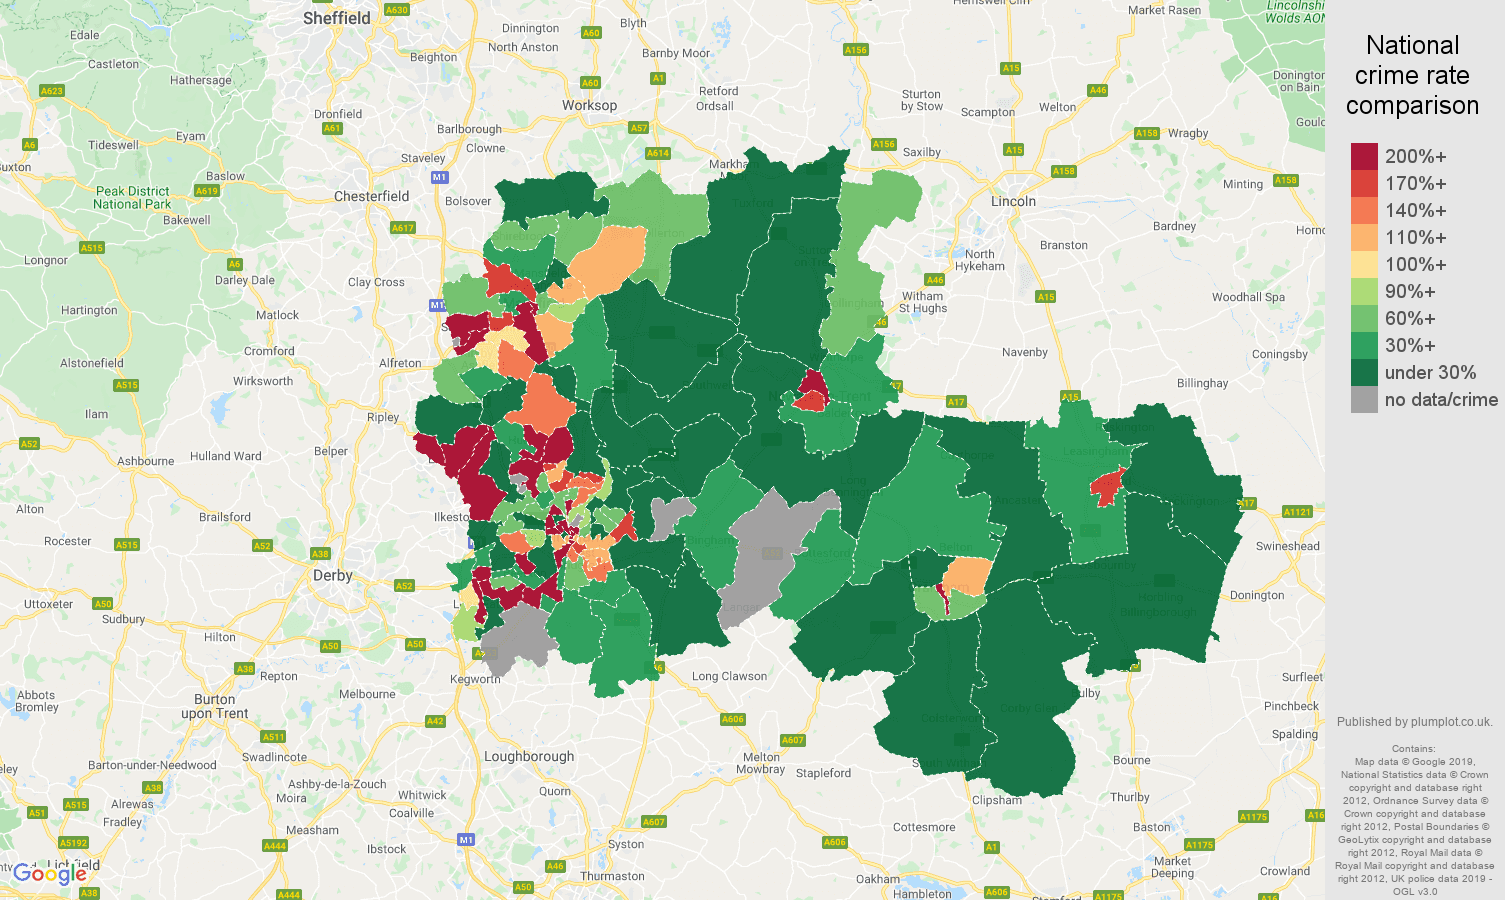 Nottingham shoplifting crime rate comparison map